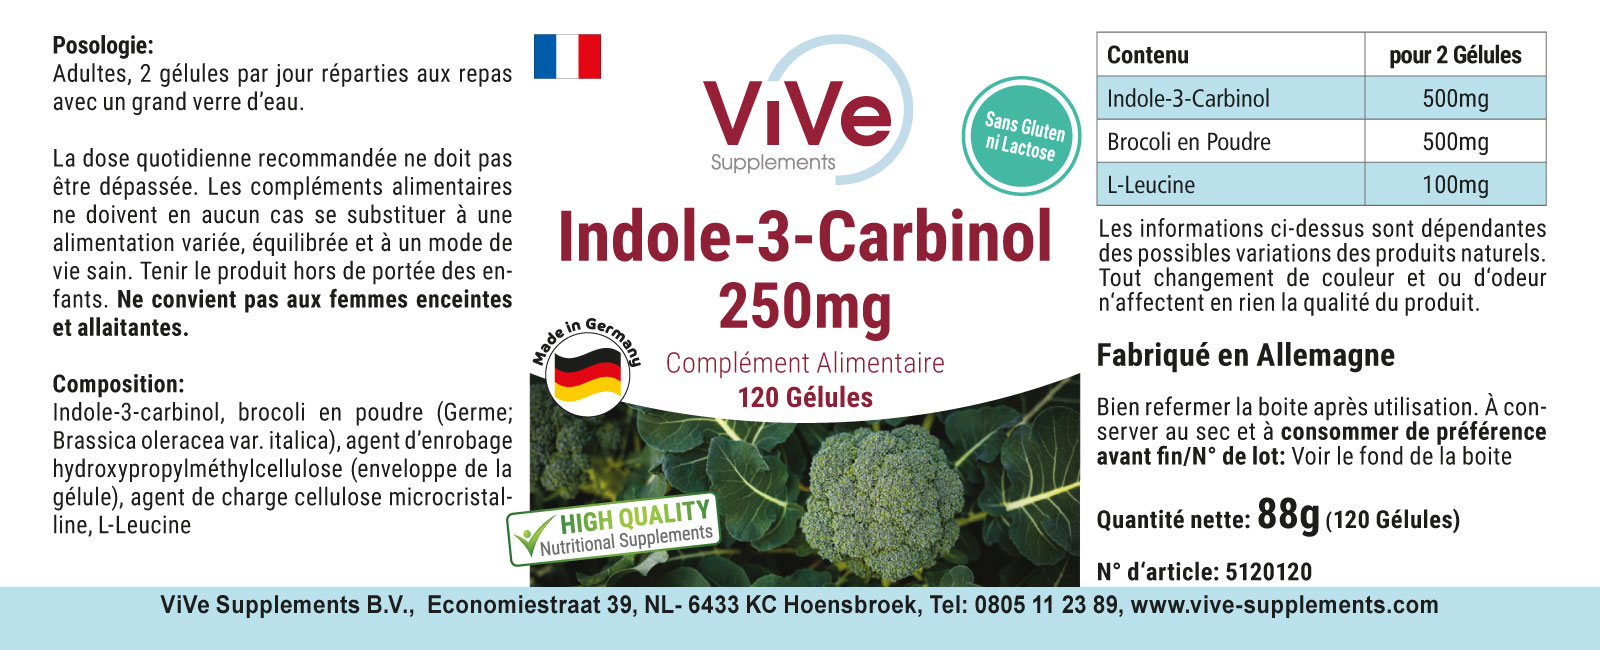 Indol-3-Carbinol 250mg